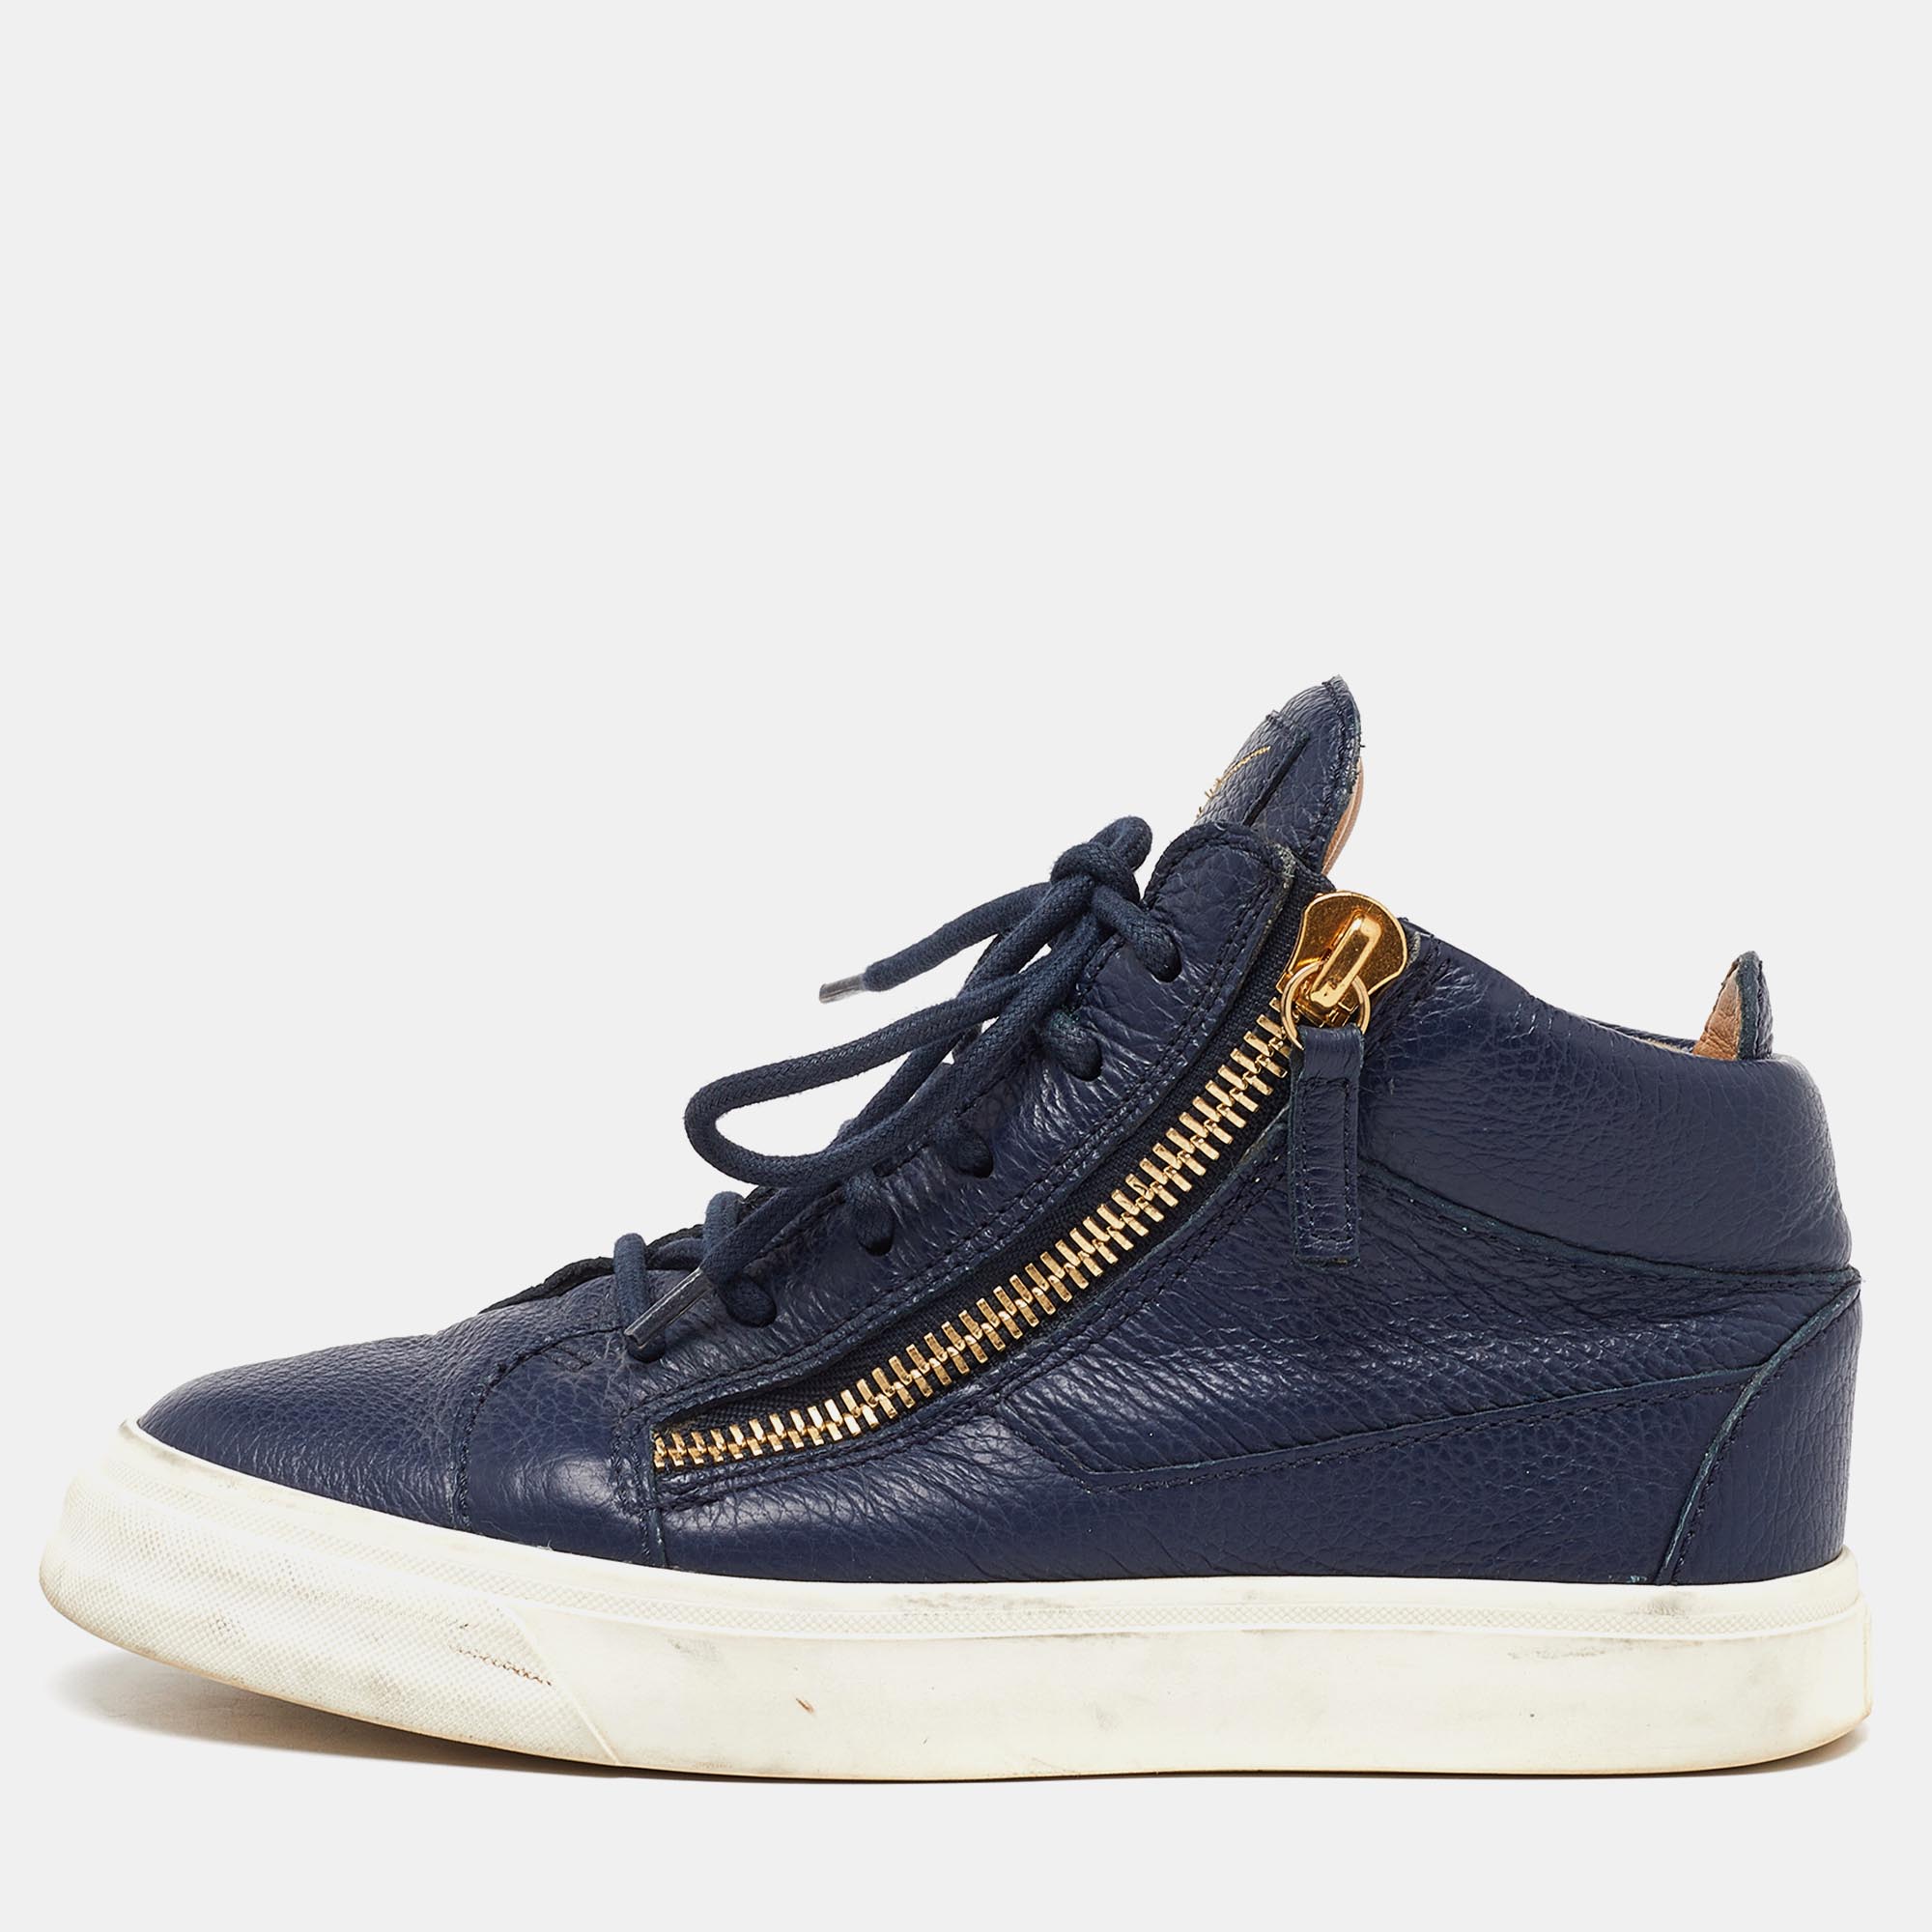 Giuseppe zanotti blue leather frankie sneakers size 35